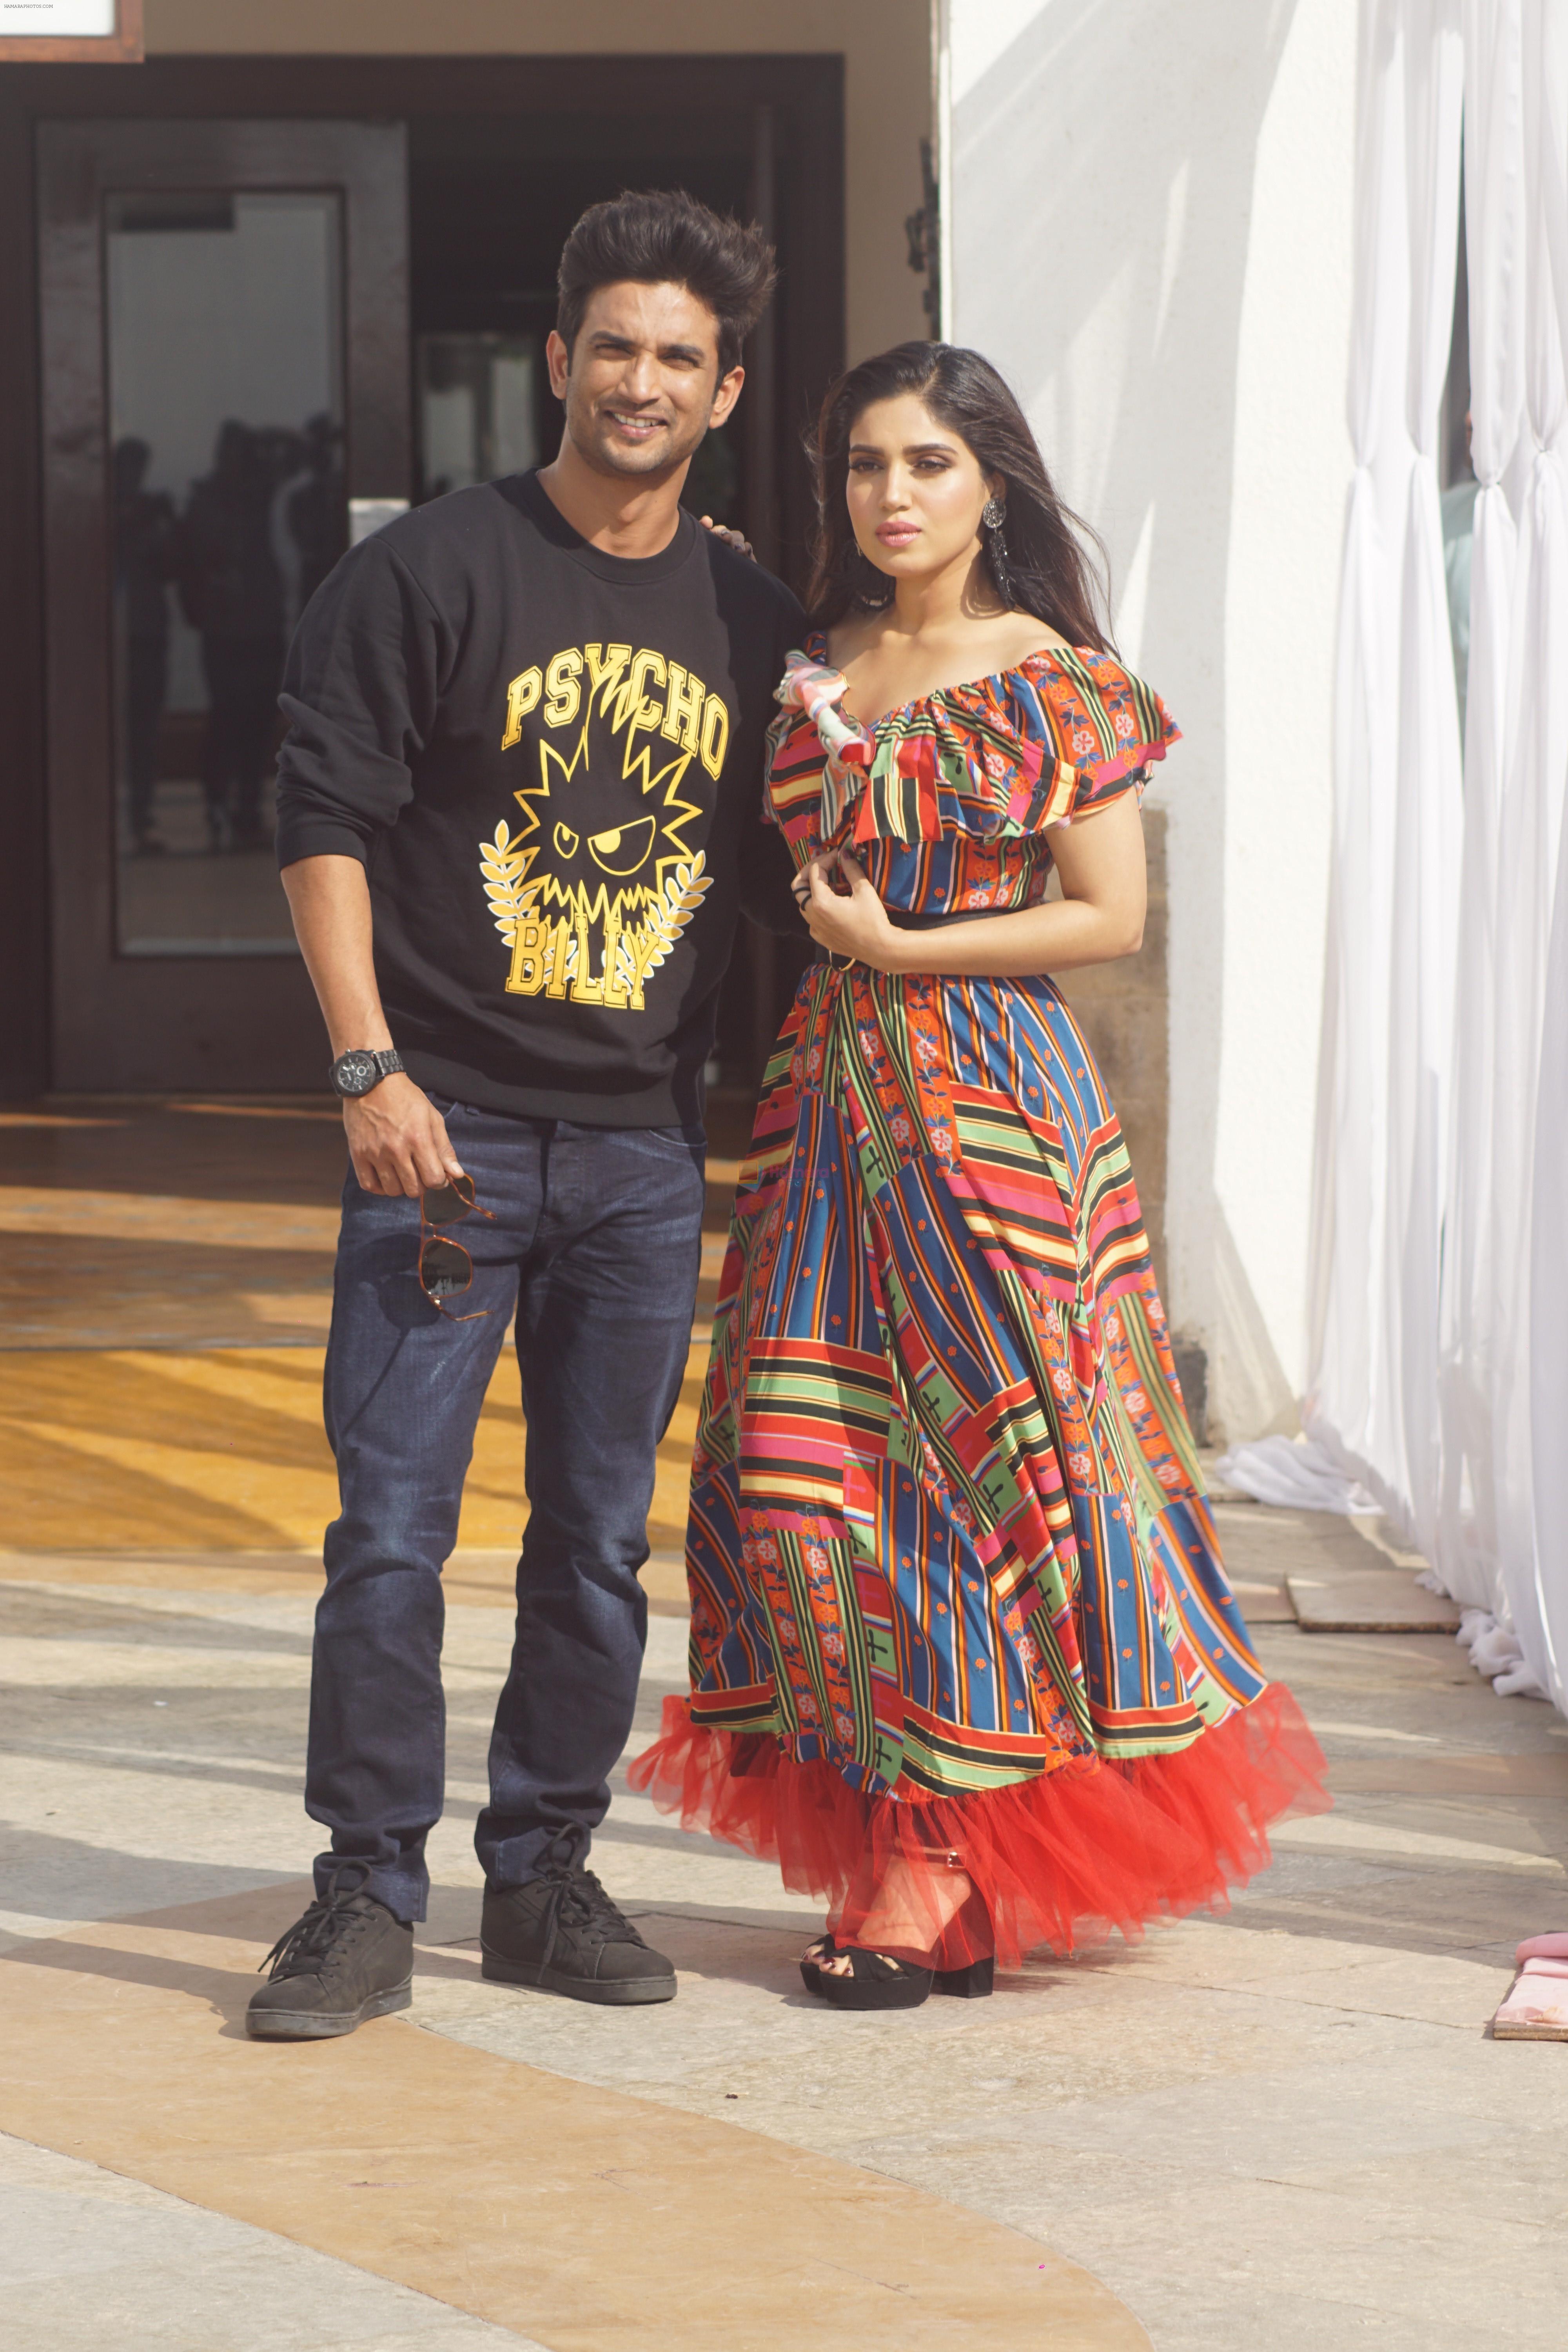 Sushant singh rajput and Bhumi Pednekar at the promotion of film Sonchiriya on 7th Jan 2019